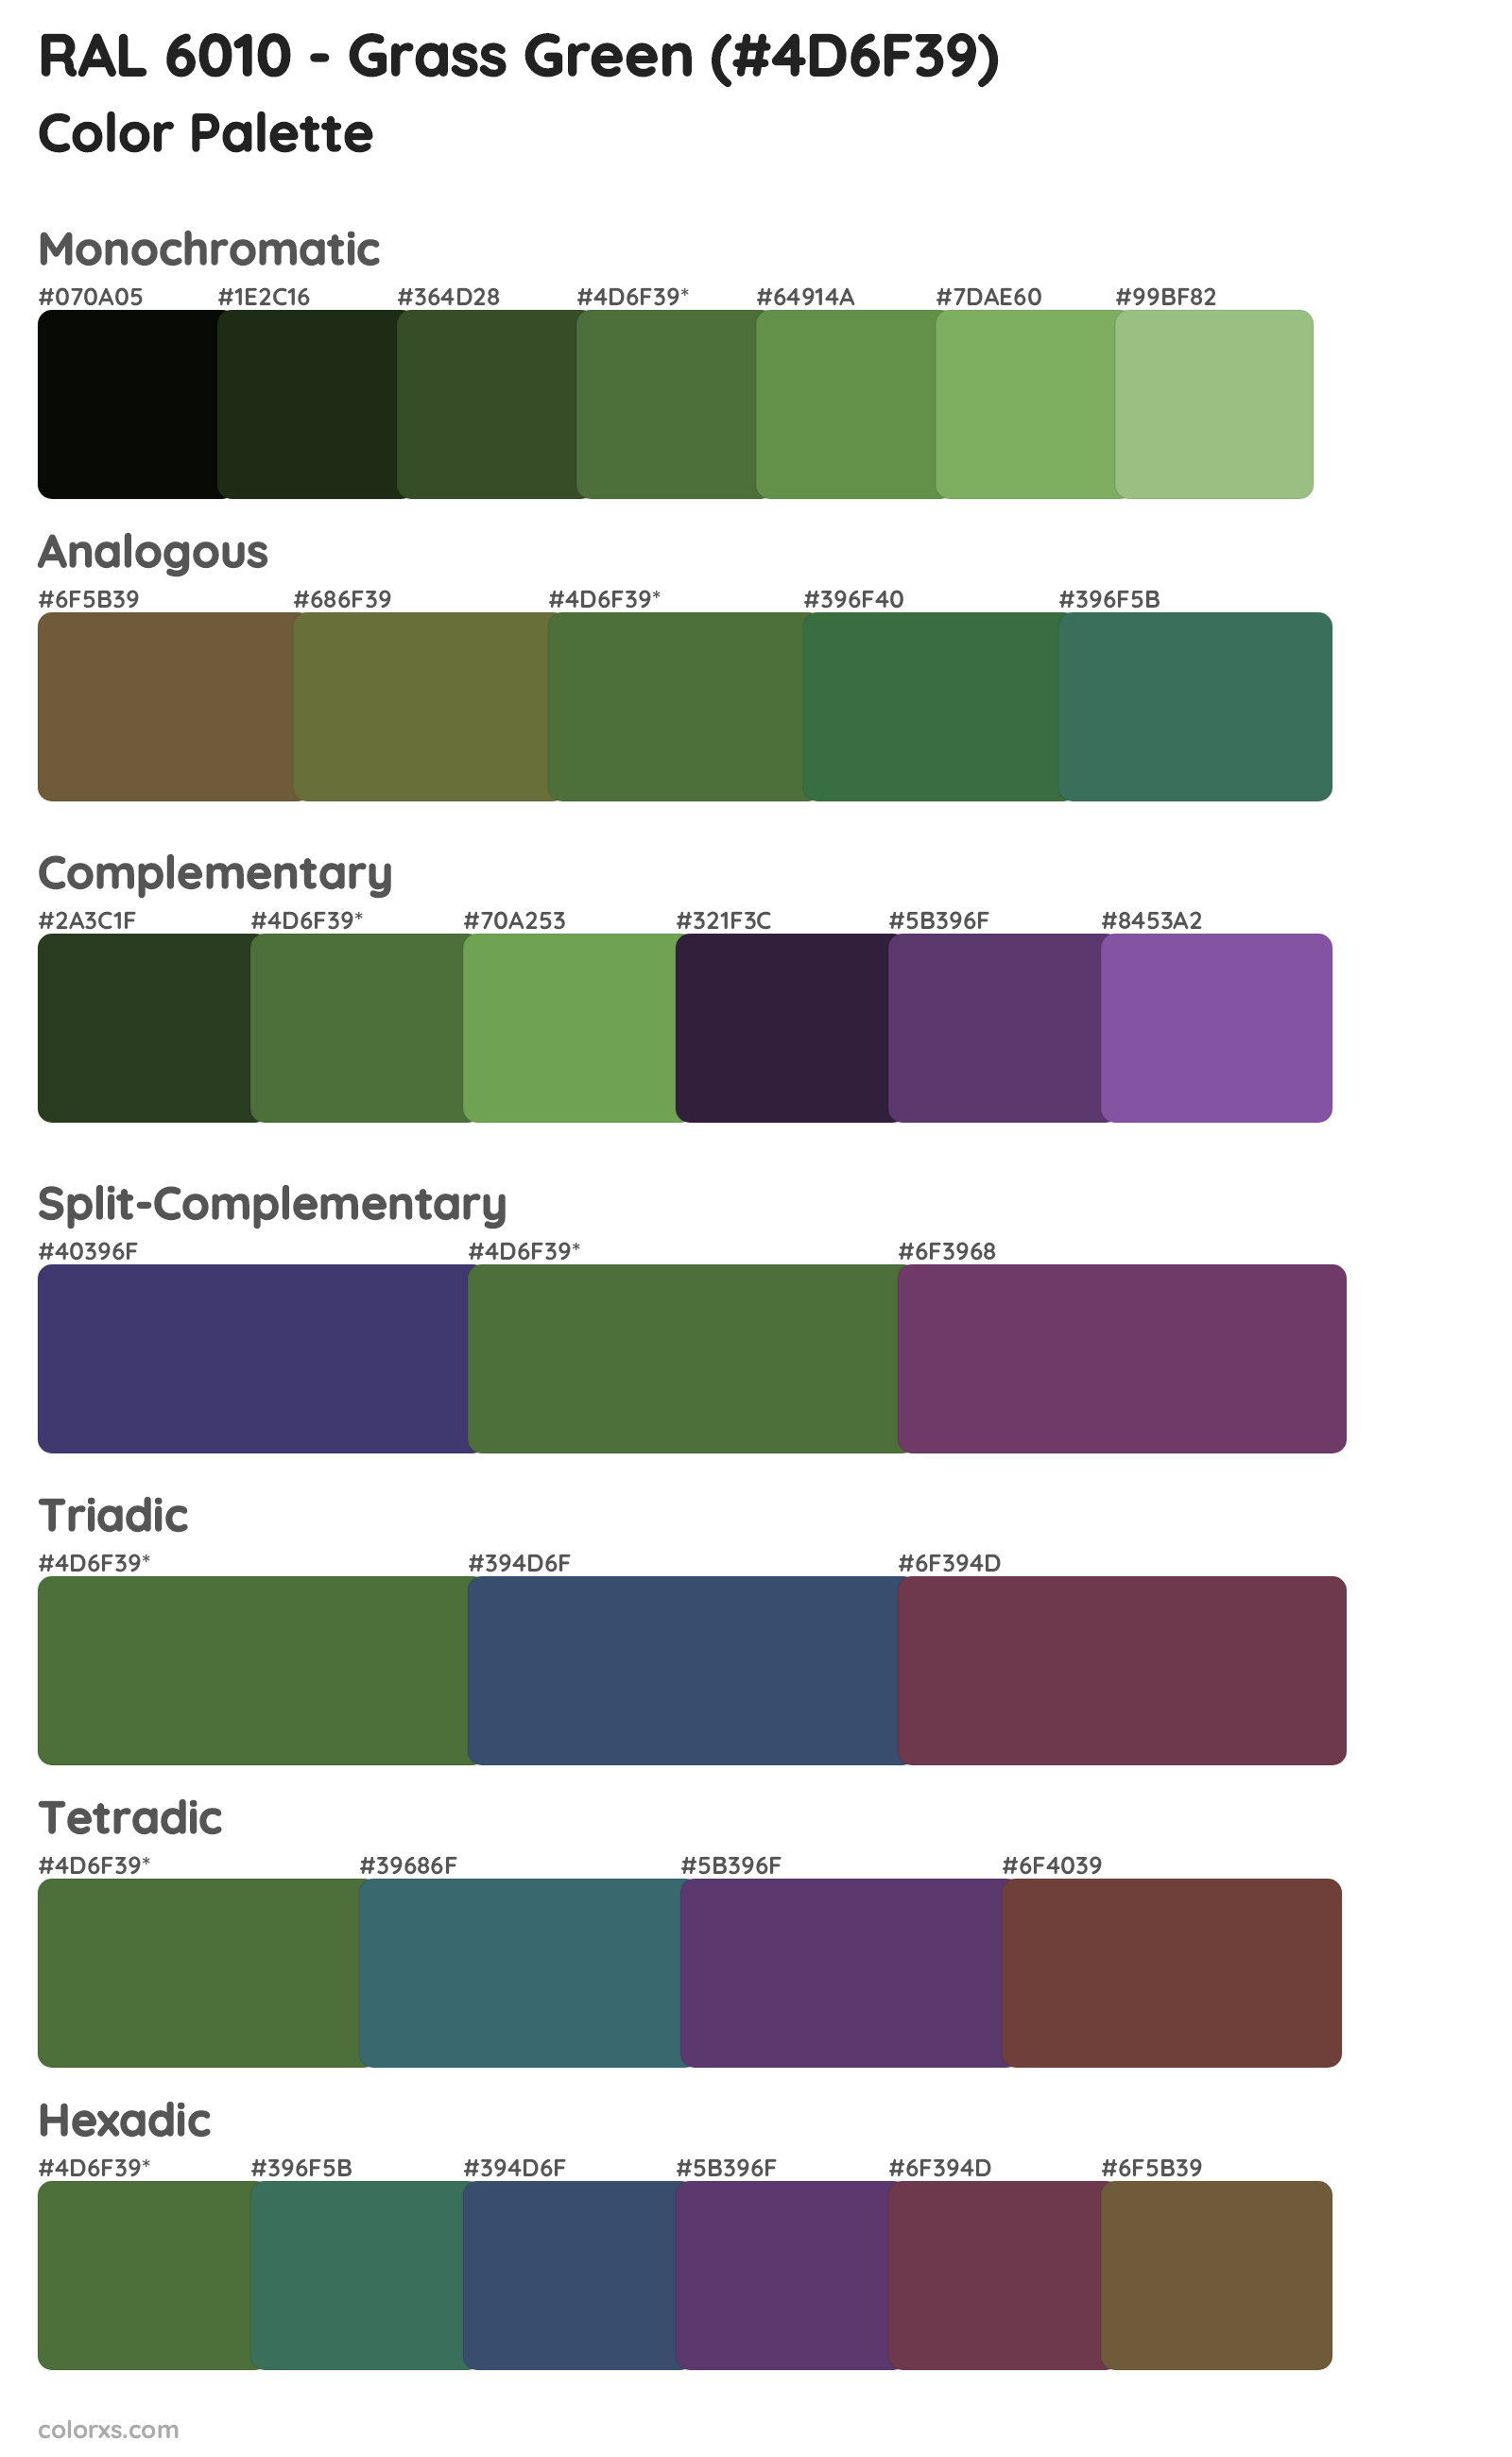 RAL 6010 - Grass Green Color Scheme Palettes